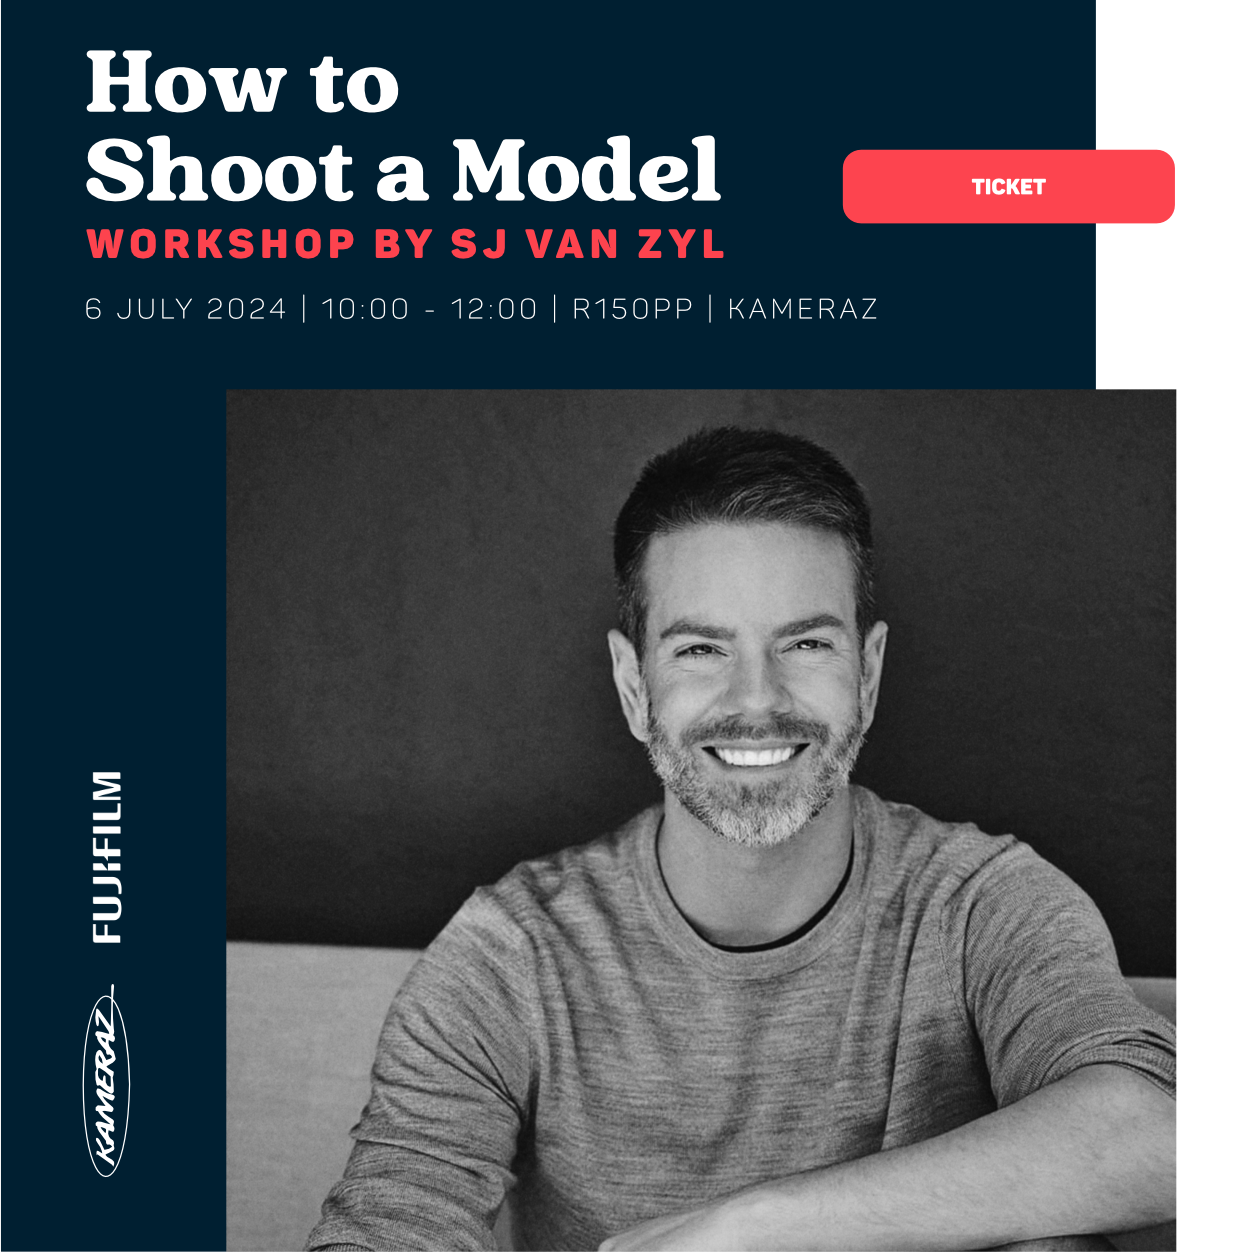 Workshop Ticket: How to Shoot a Model with SJ van Zyl (6 July 2024)